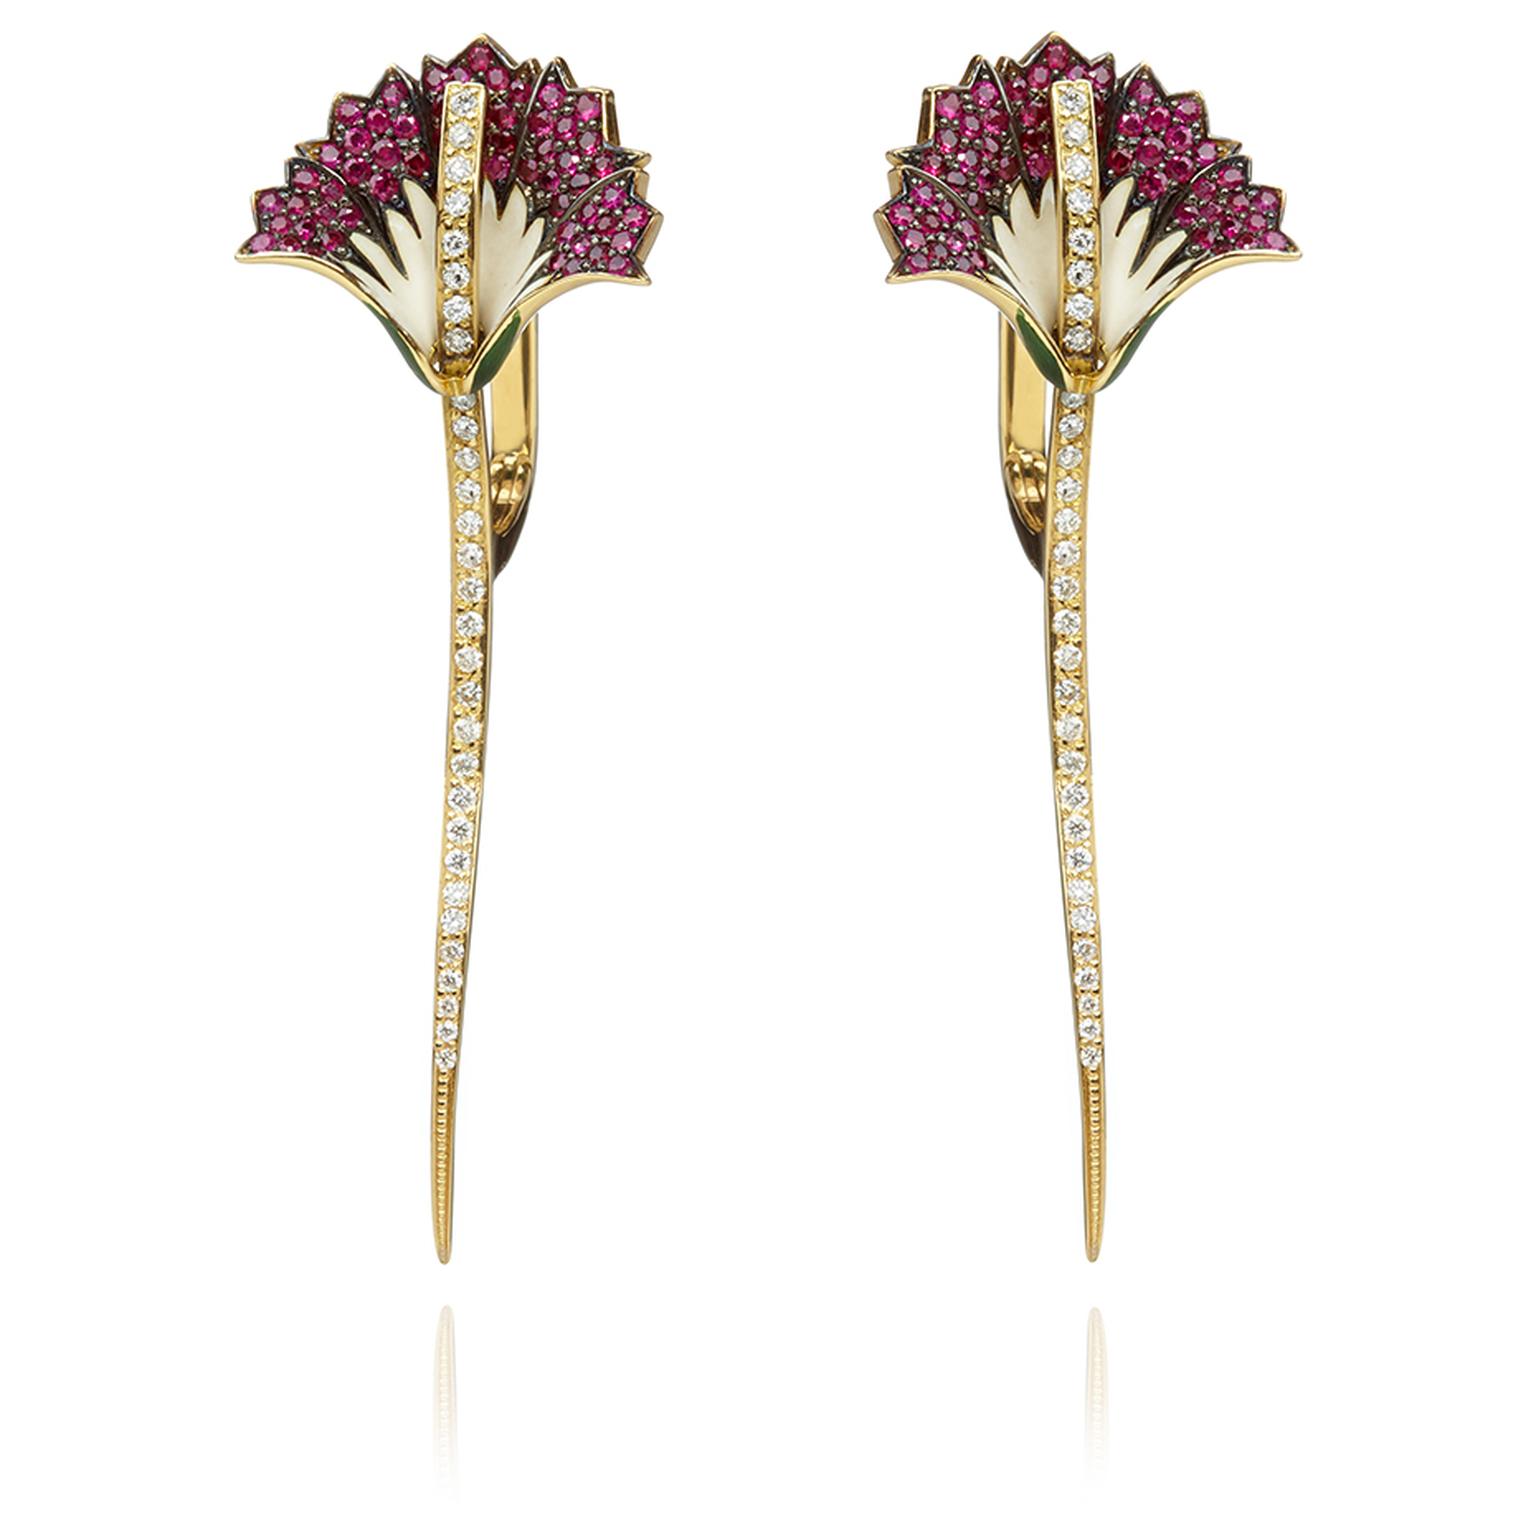 Ilgiz F for Annoushka Carnation earrings in yellow gold with rubies set amongst a white diamond stem. £8,100.